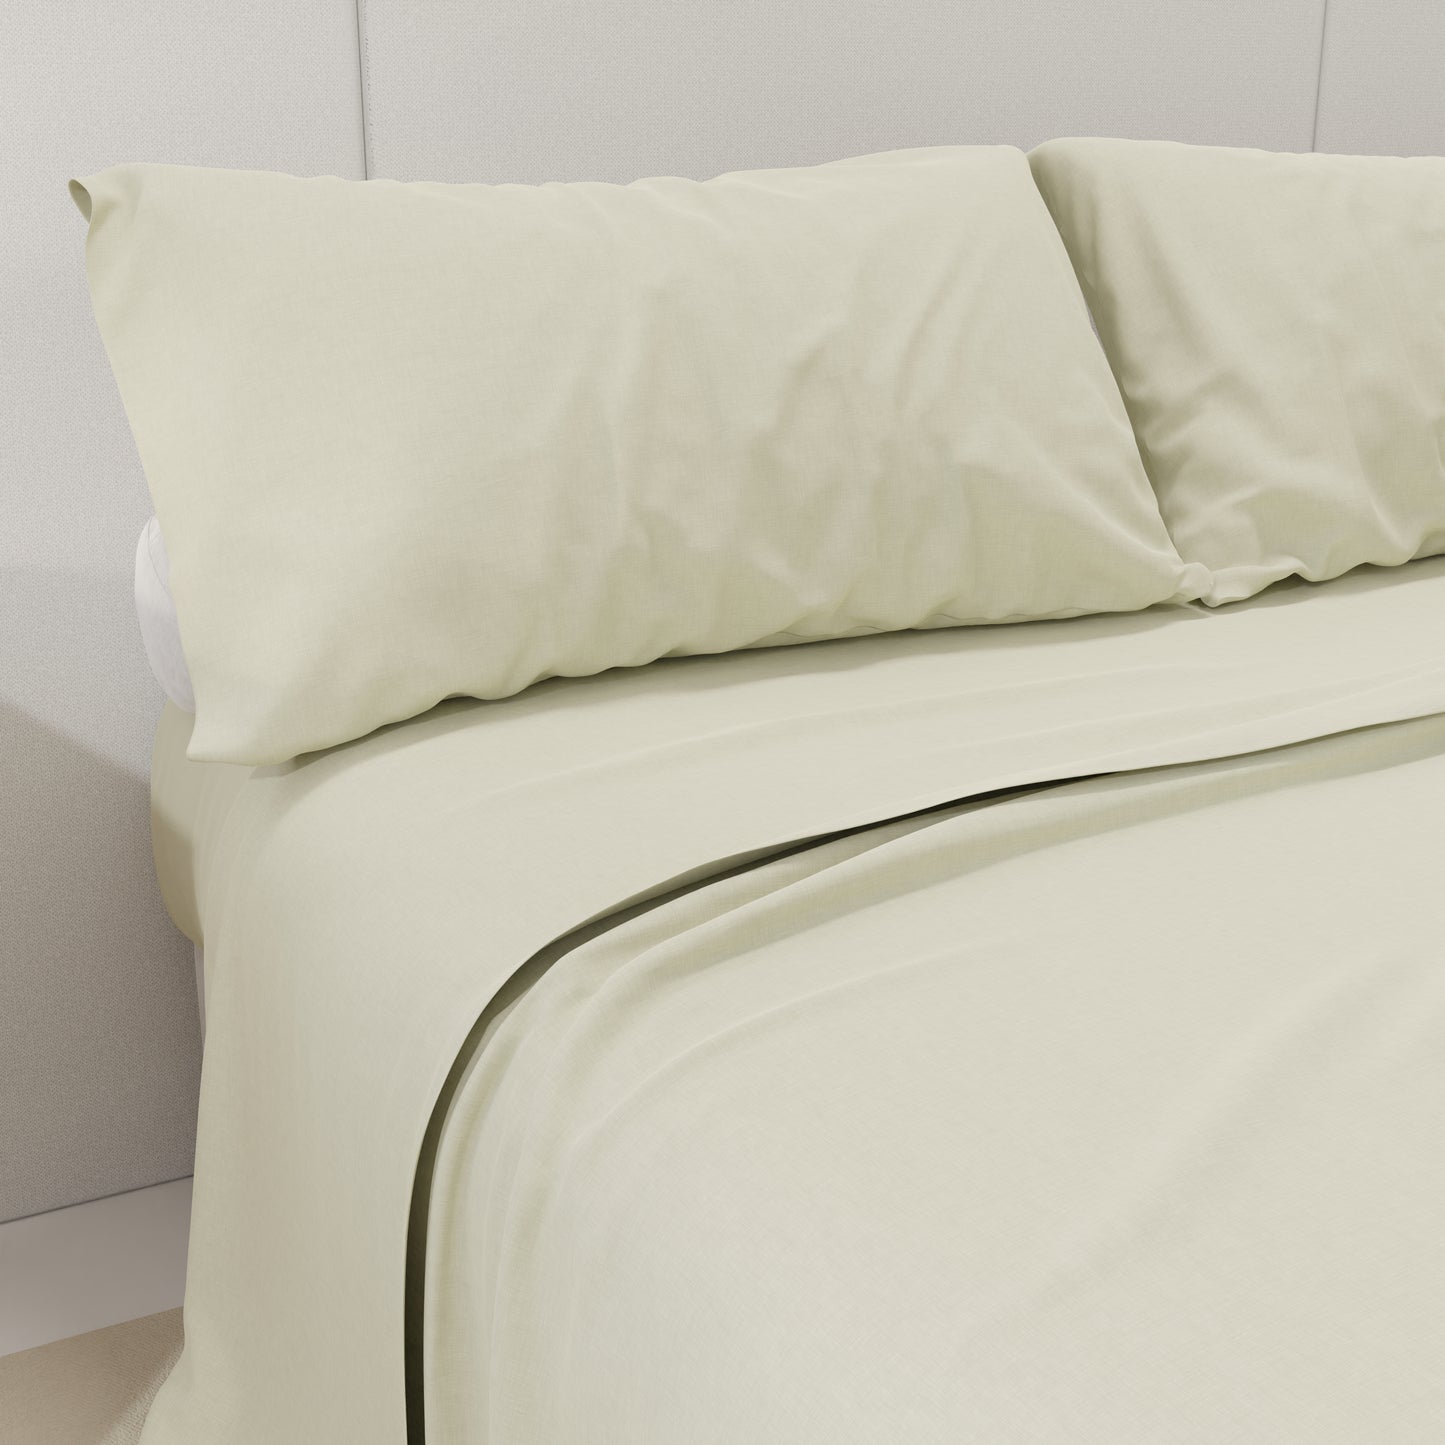 Percale sheets, Cream cotton double sheets